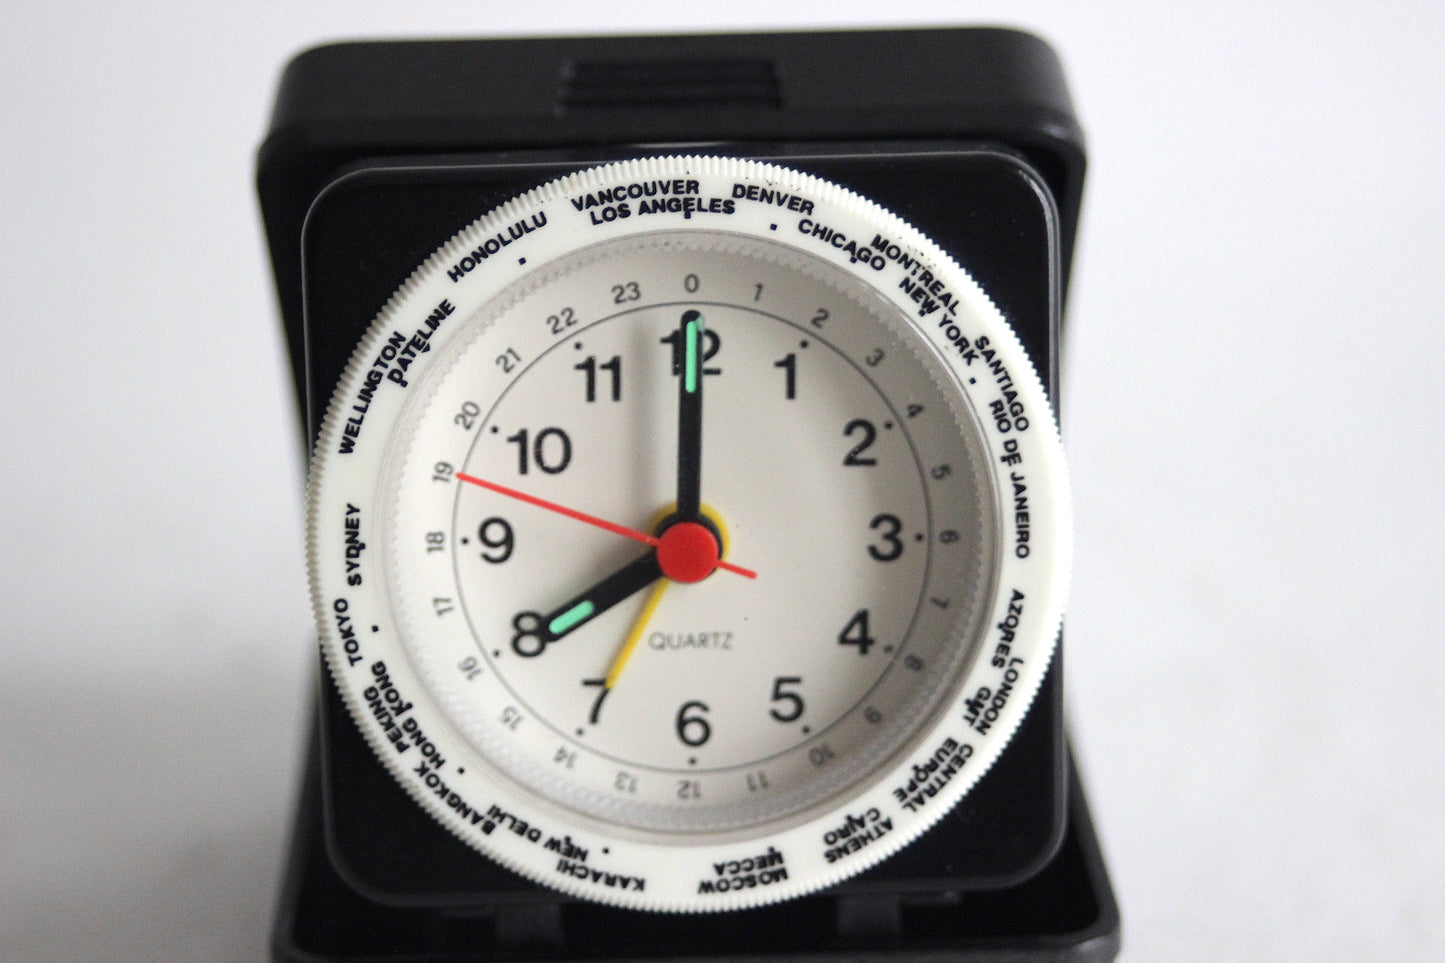 Compact travel world alarm clock 90s.